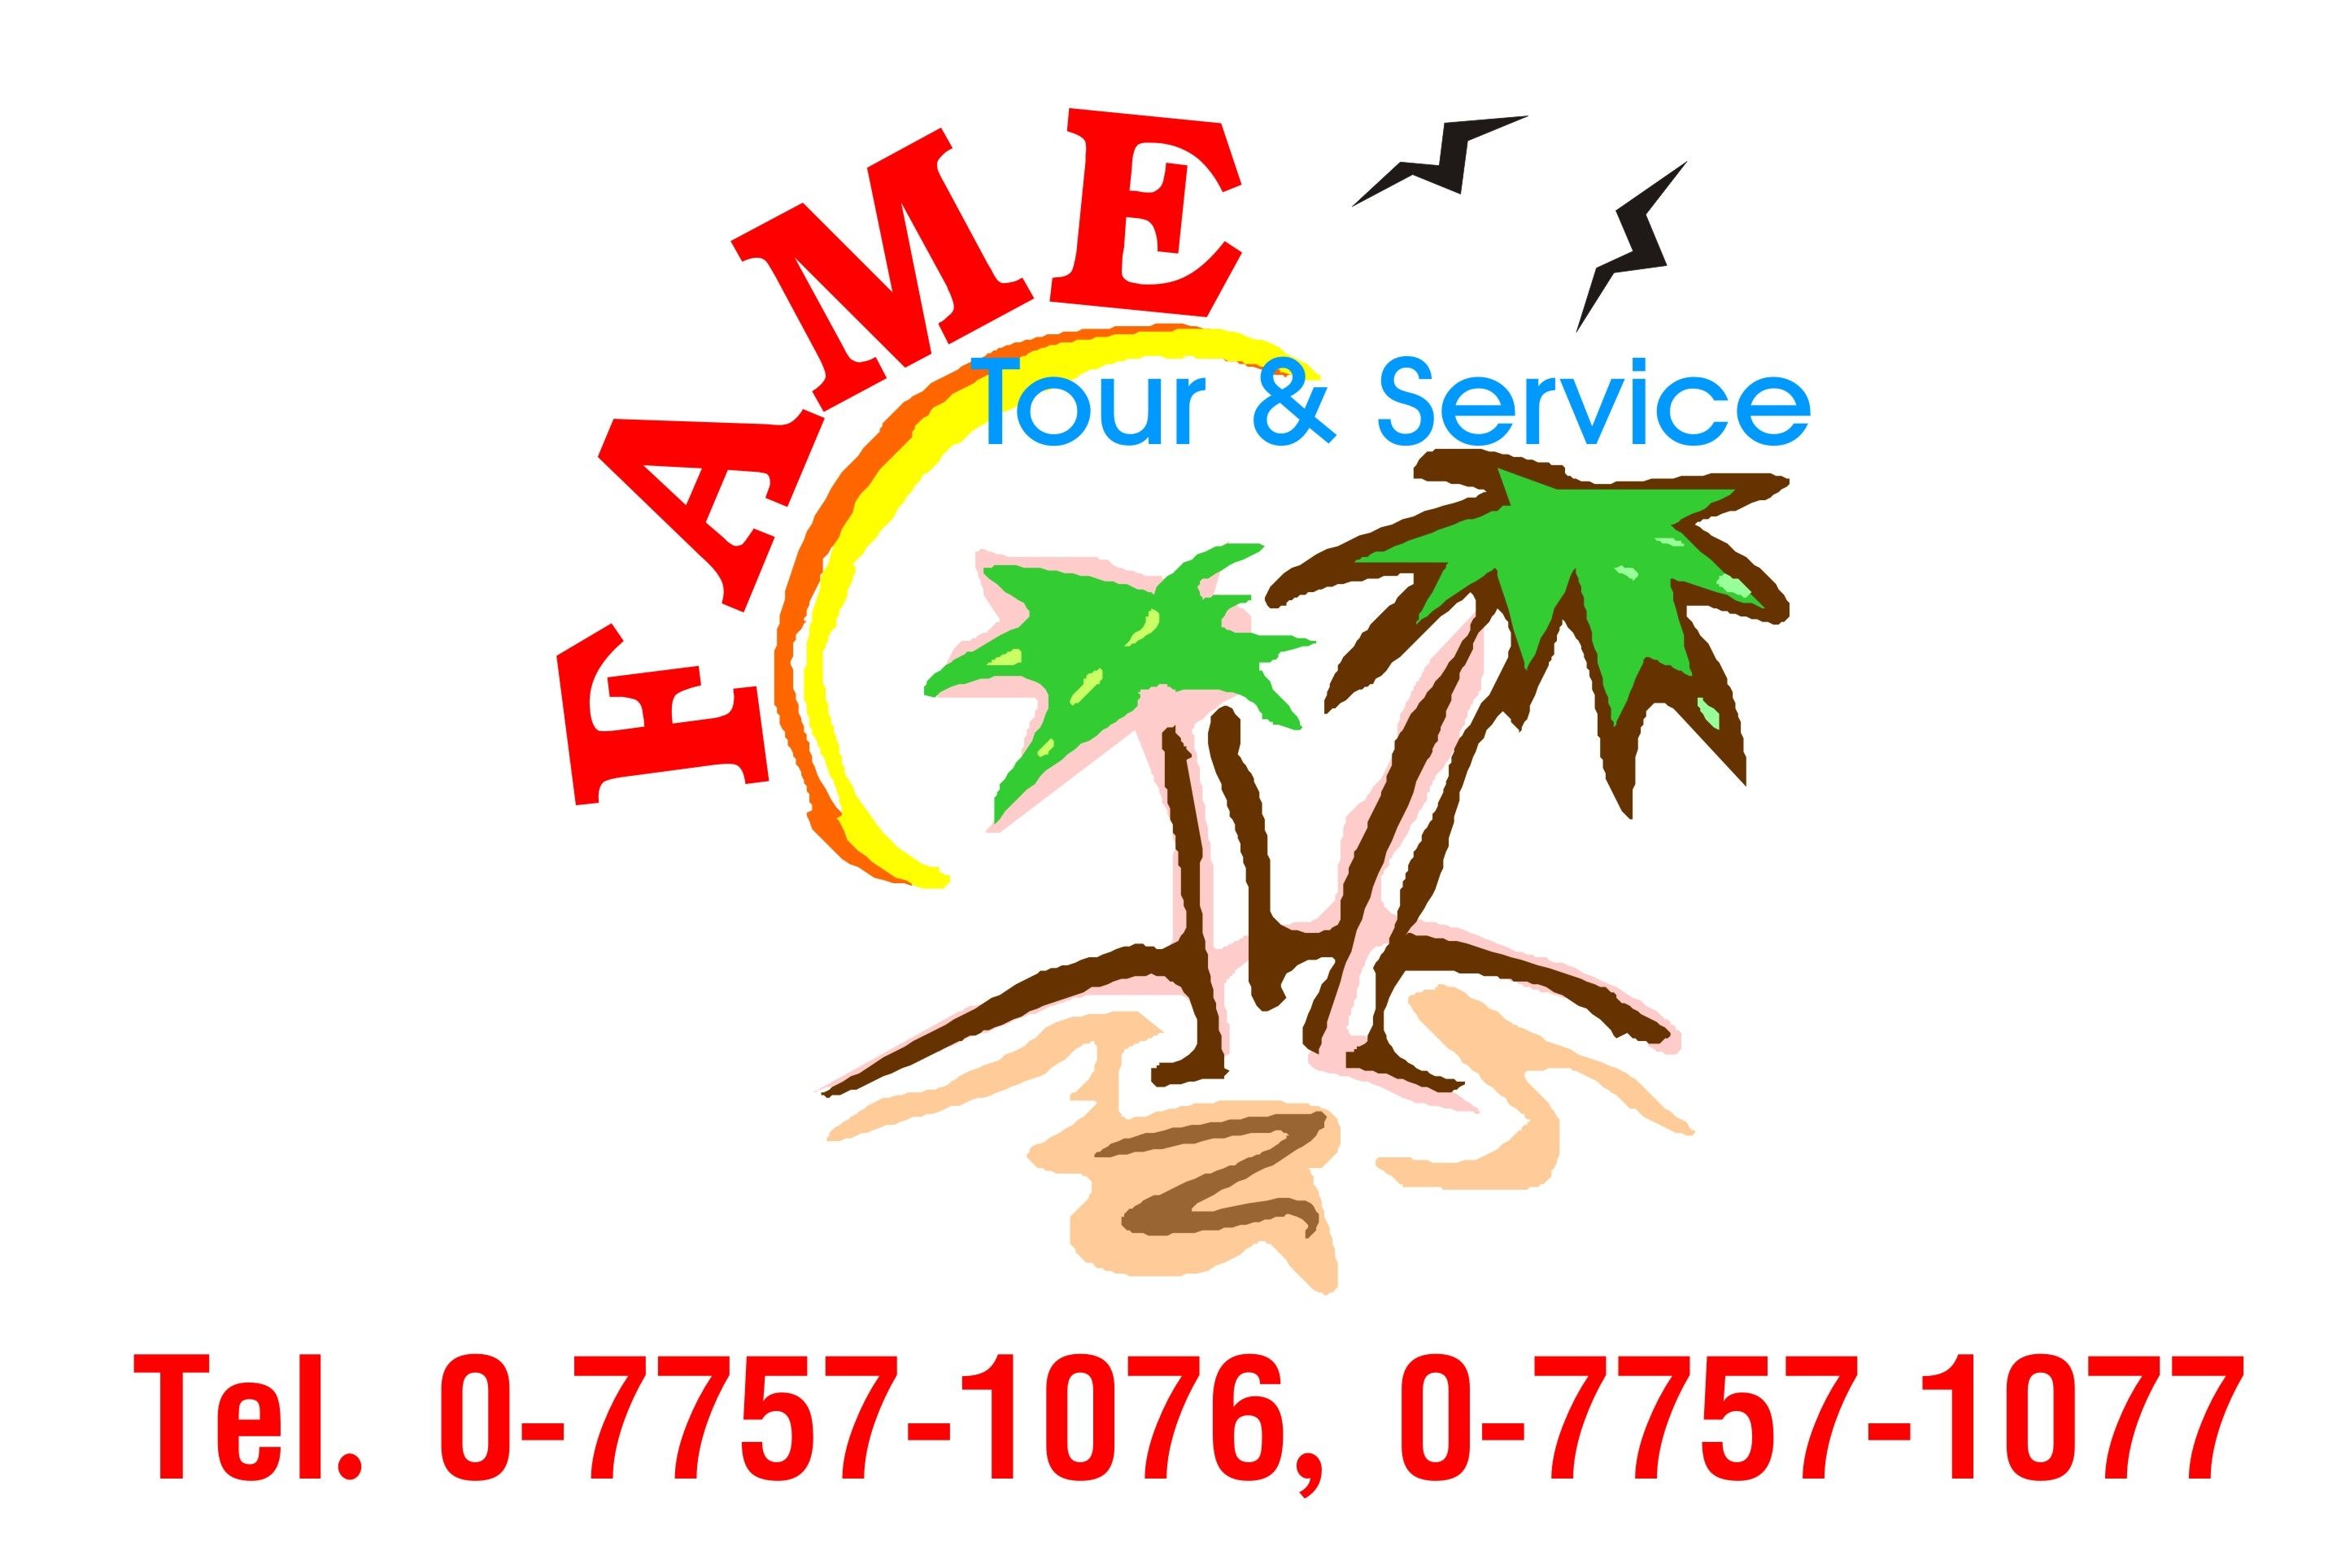 Fame Tours & Services logo